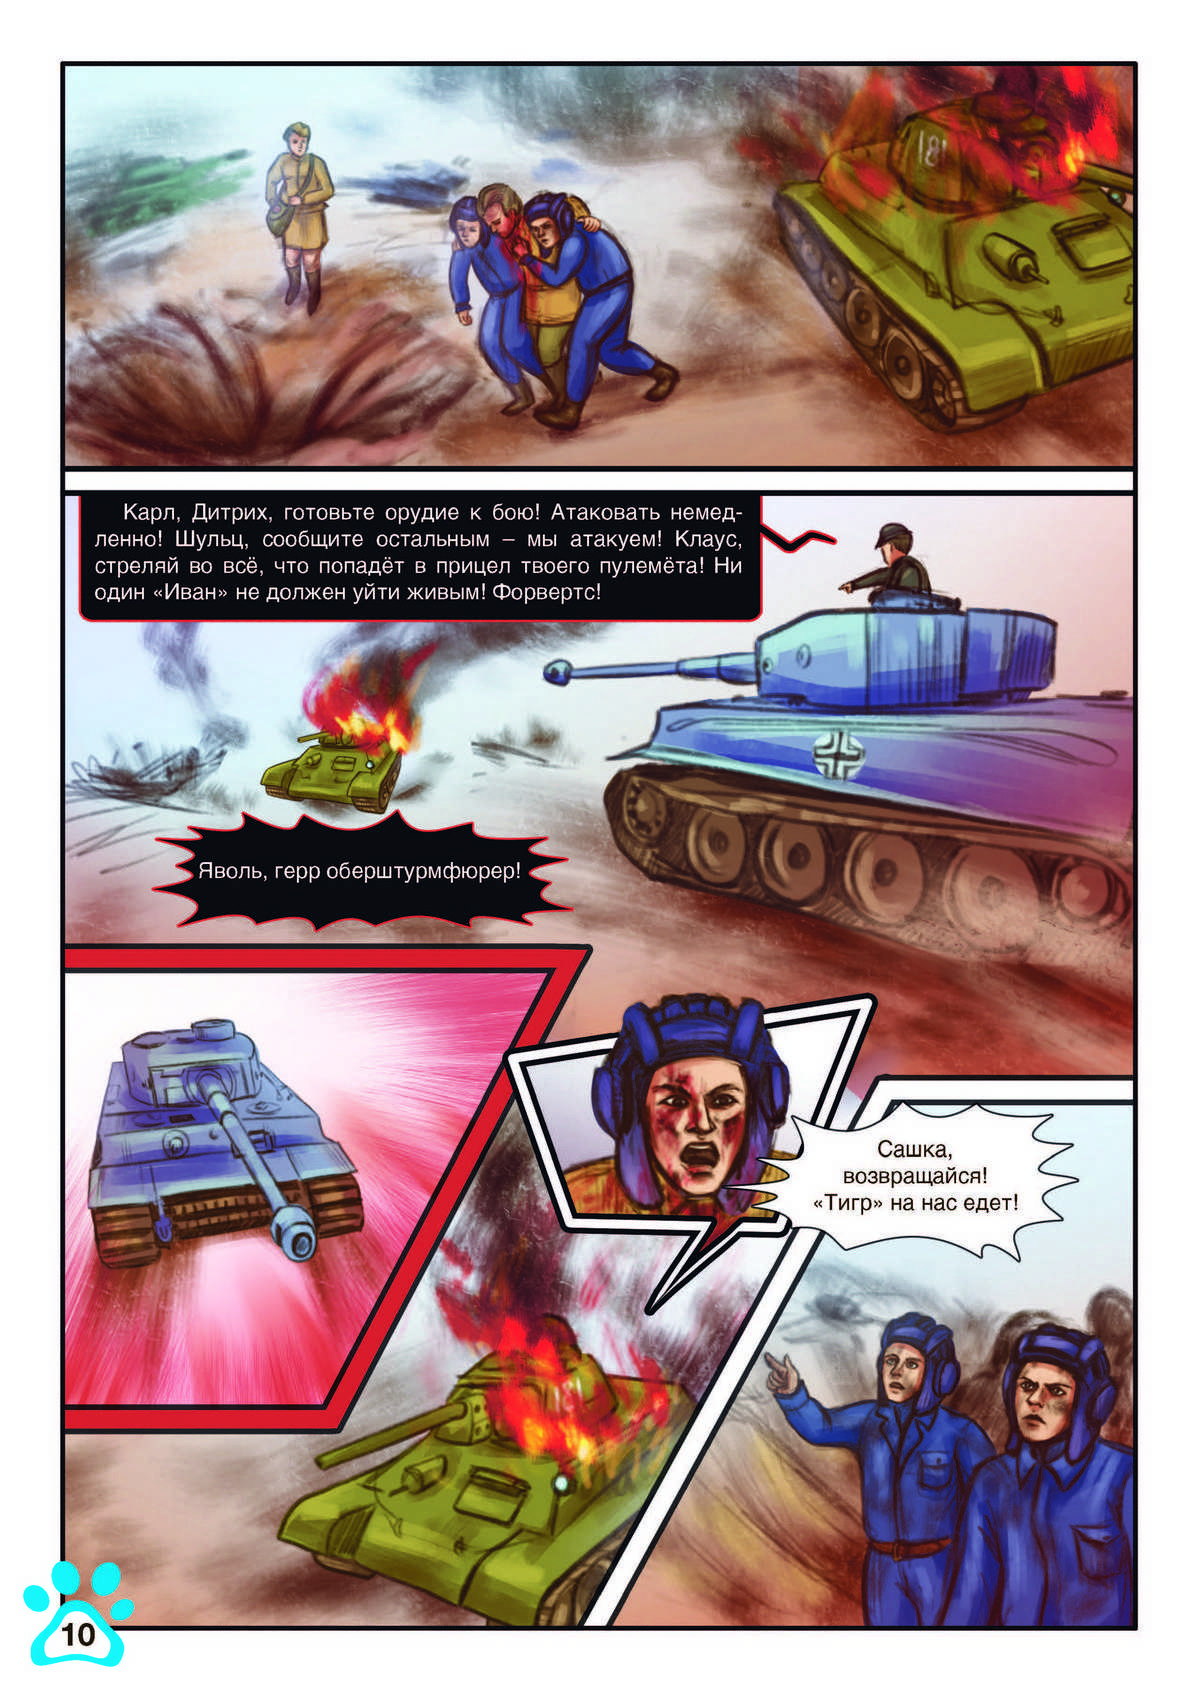 сталинский таран танки штурмуют доты игорь градов фото 2